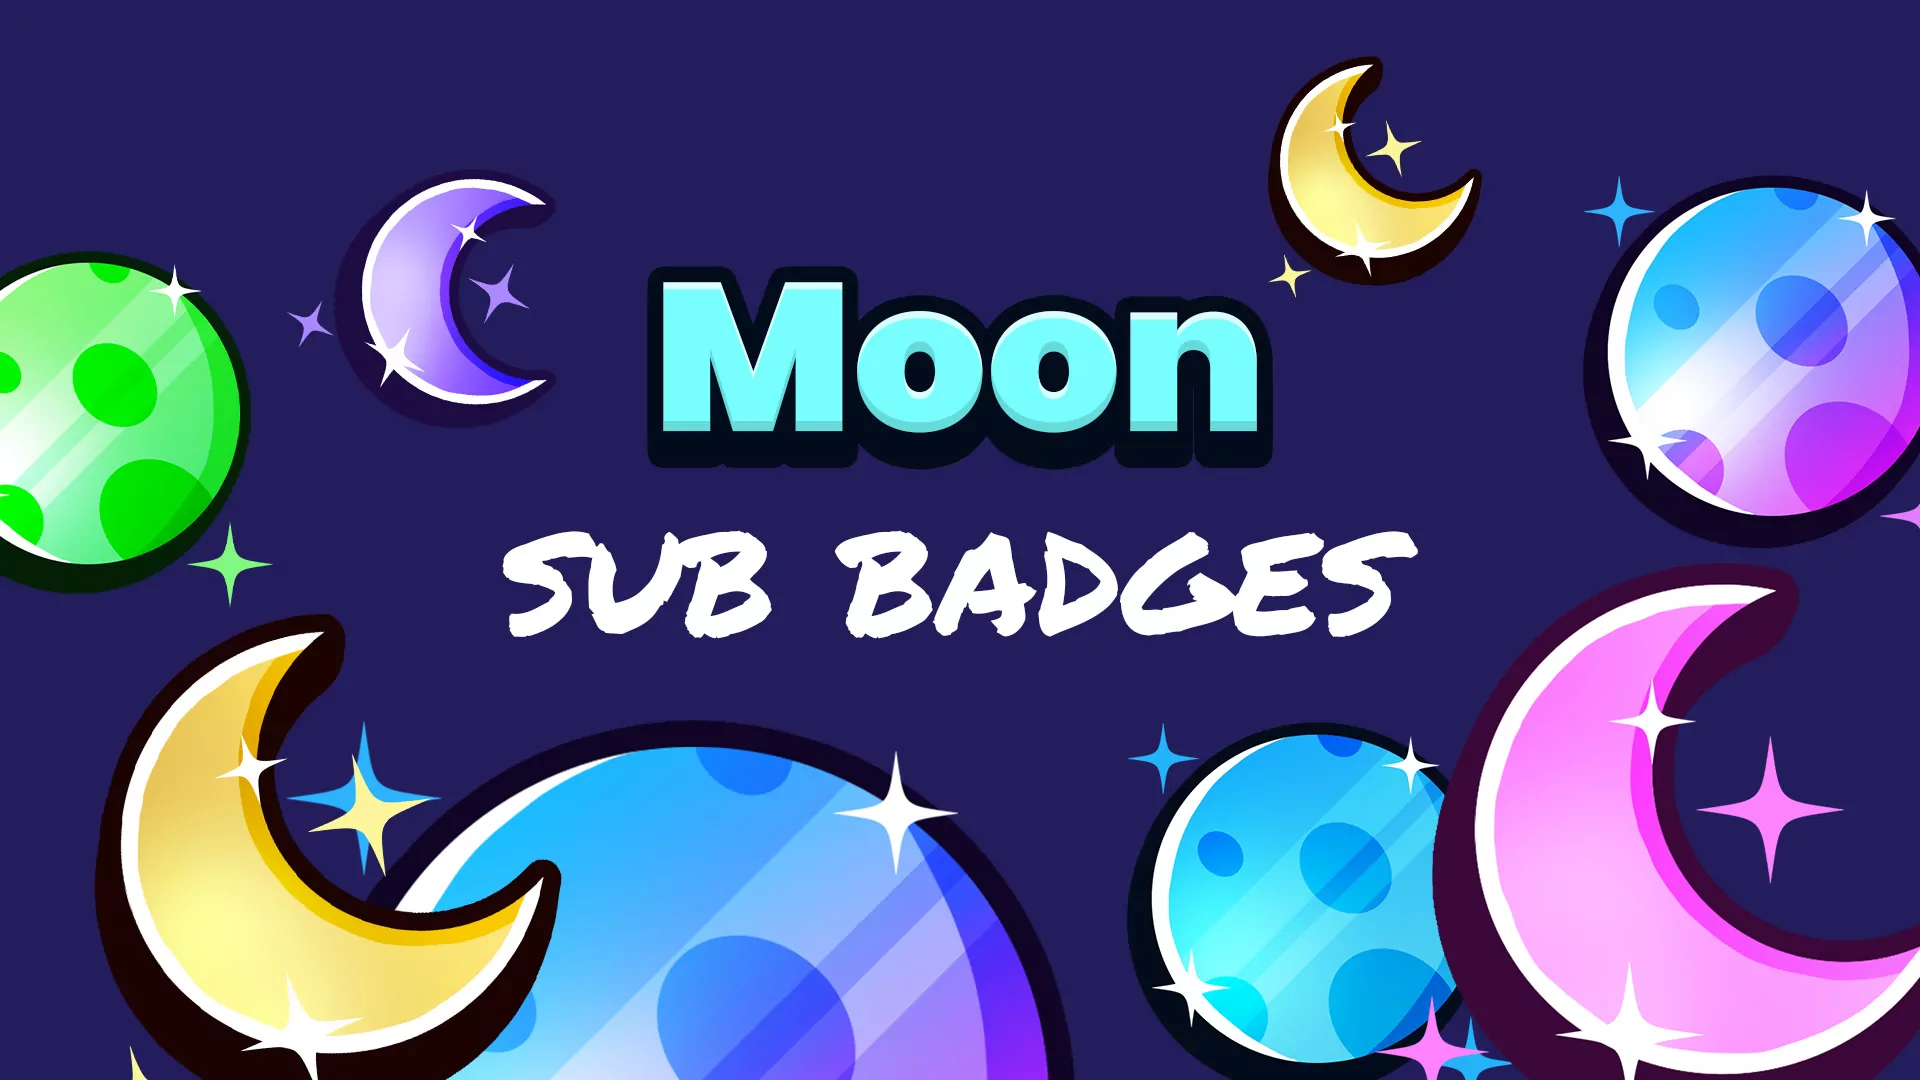 Moon Sub Badges - Main Image